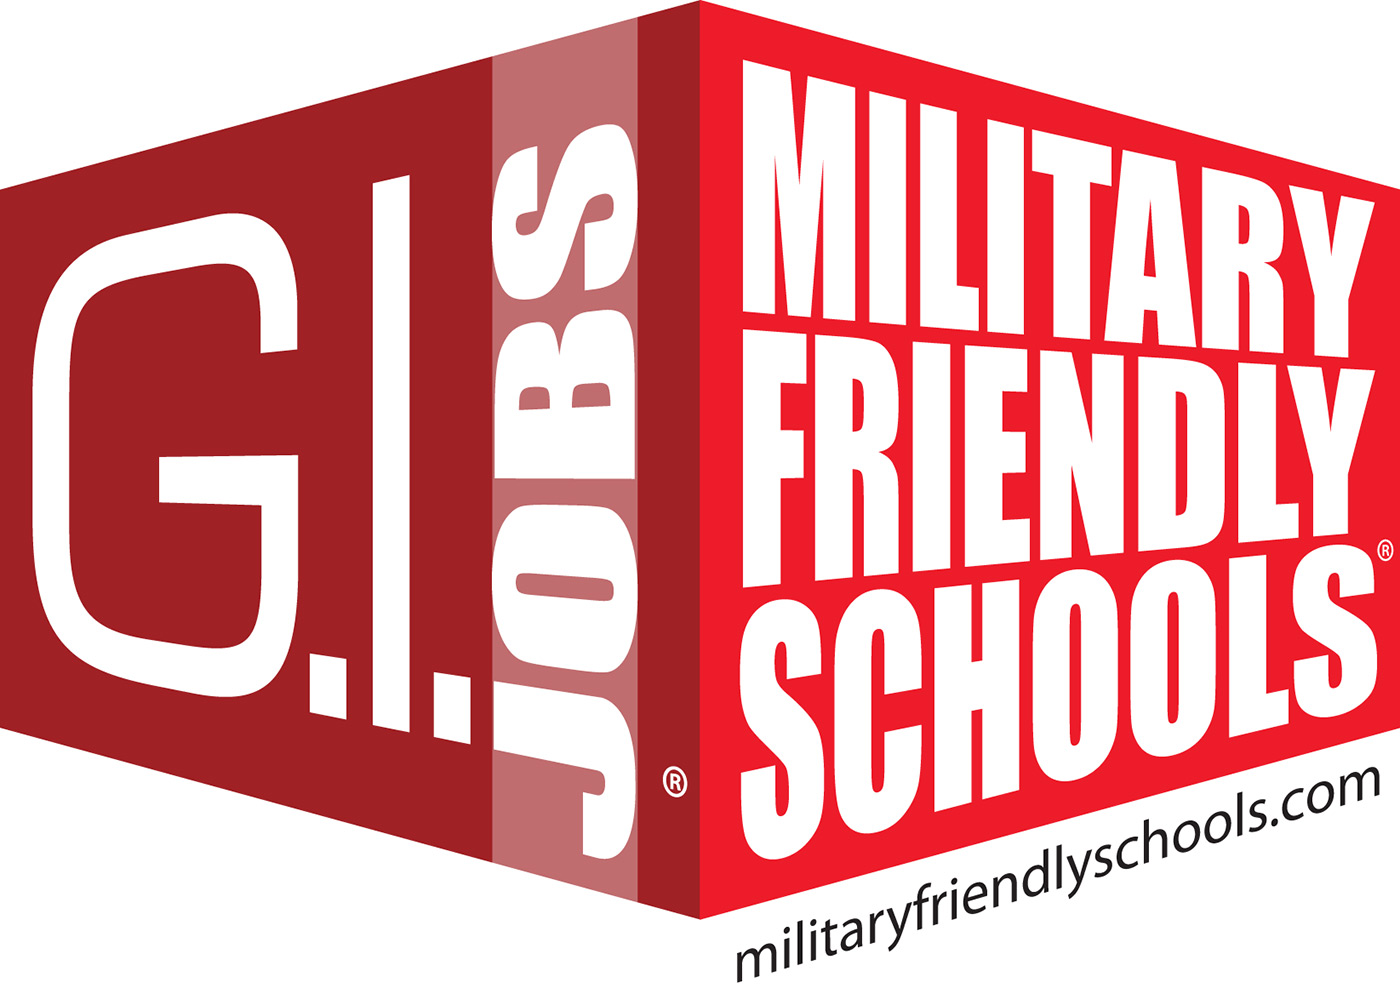 G.I. Jobs military firendly schools logo